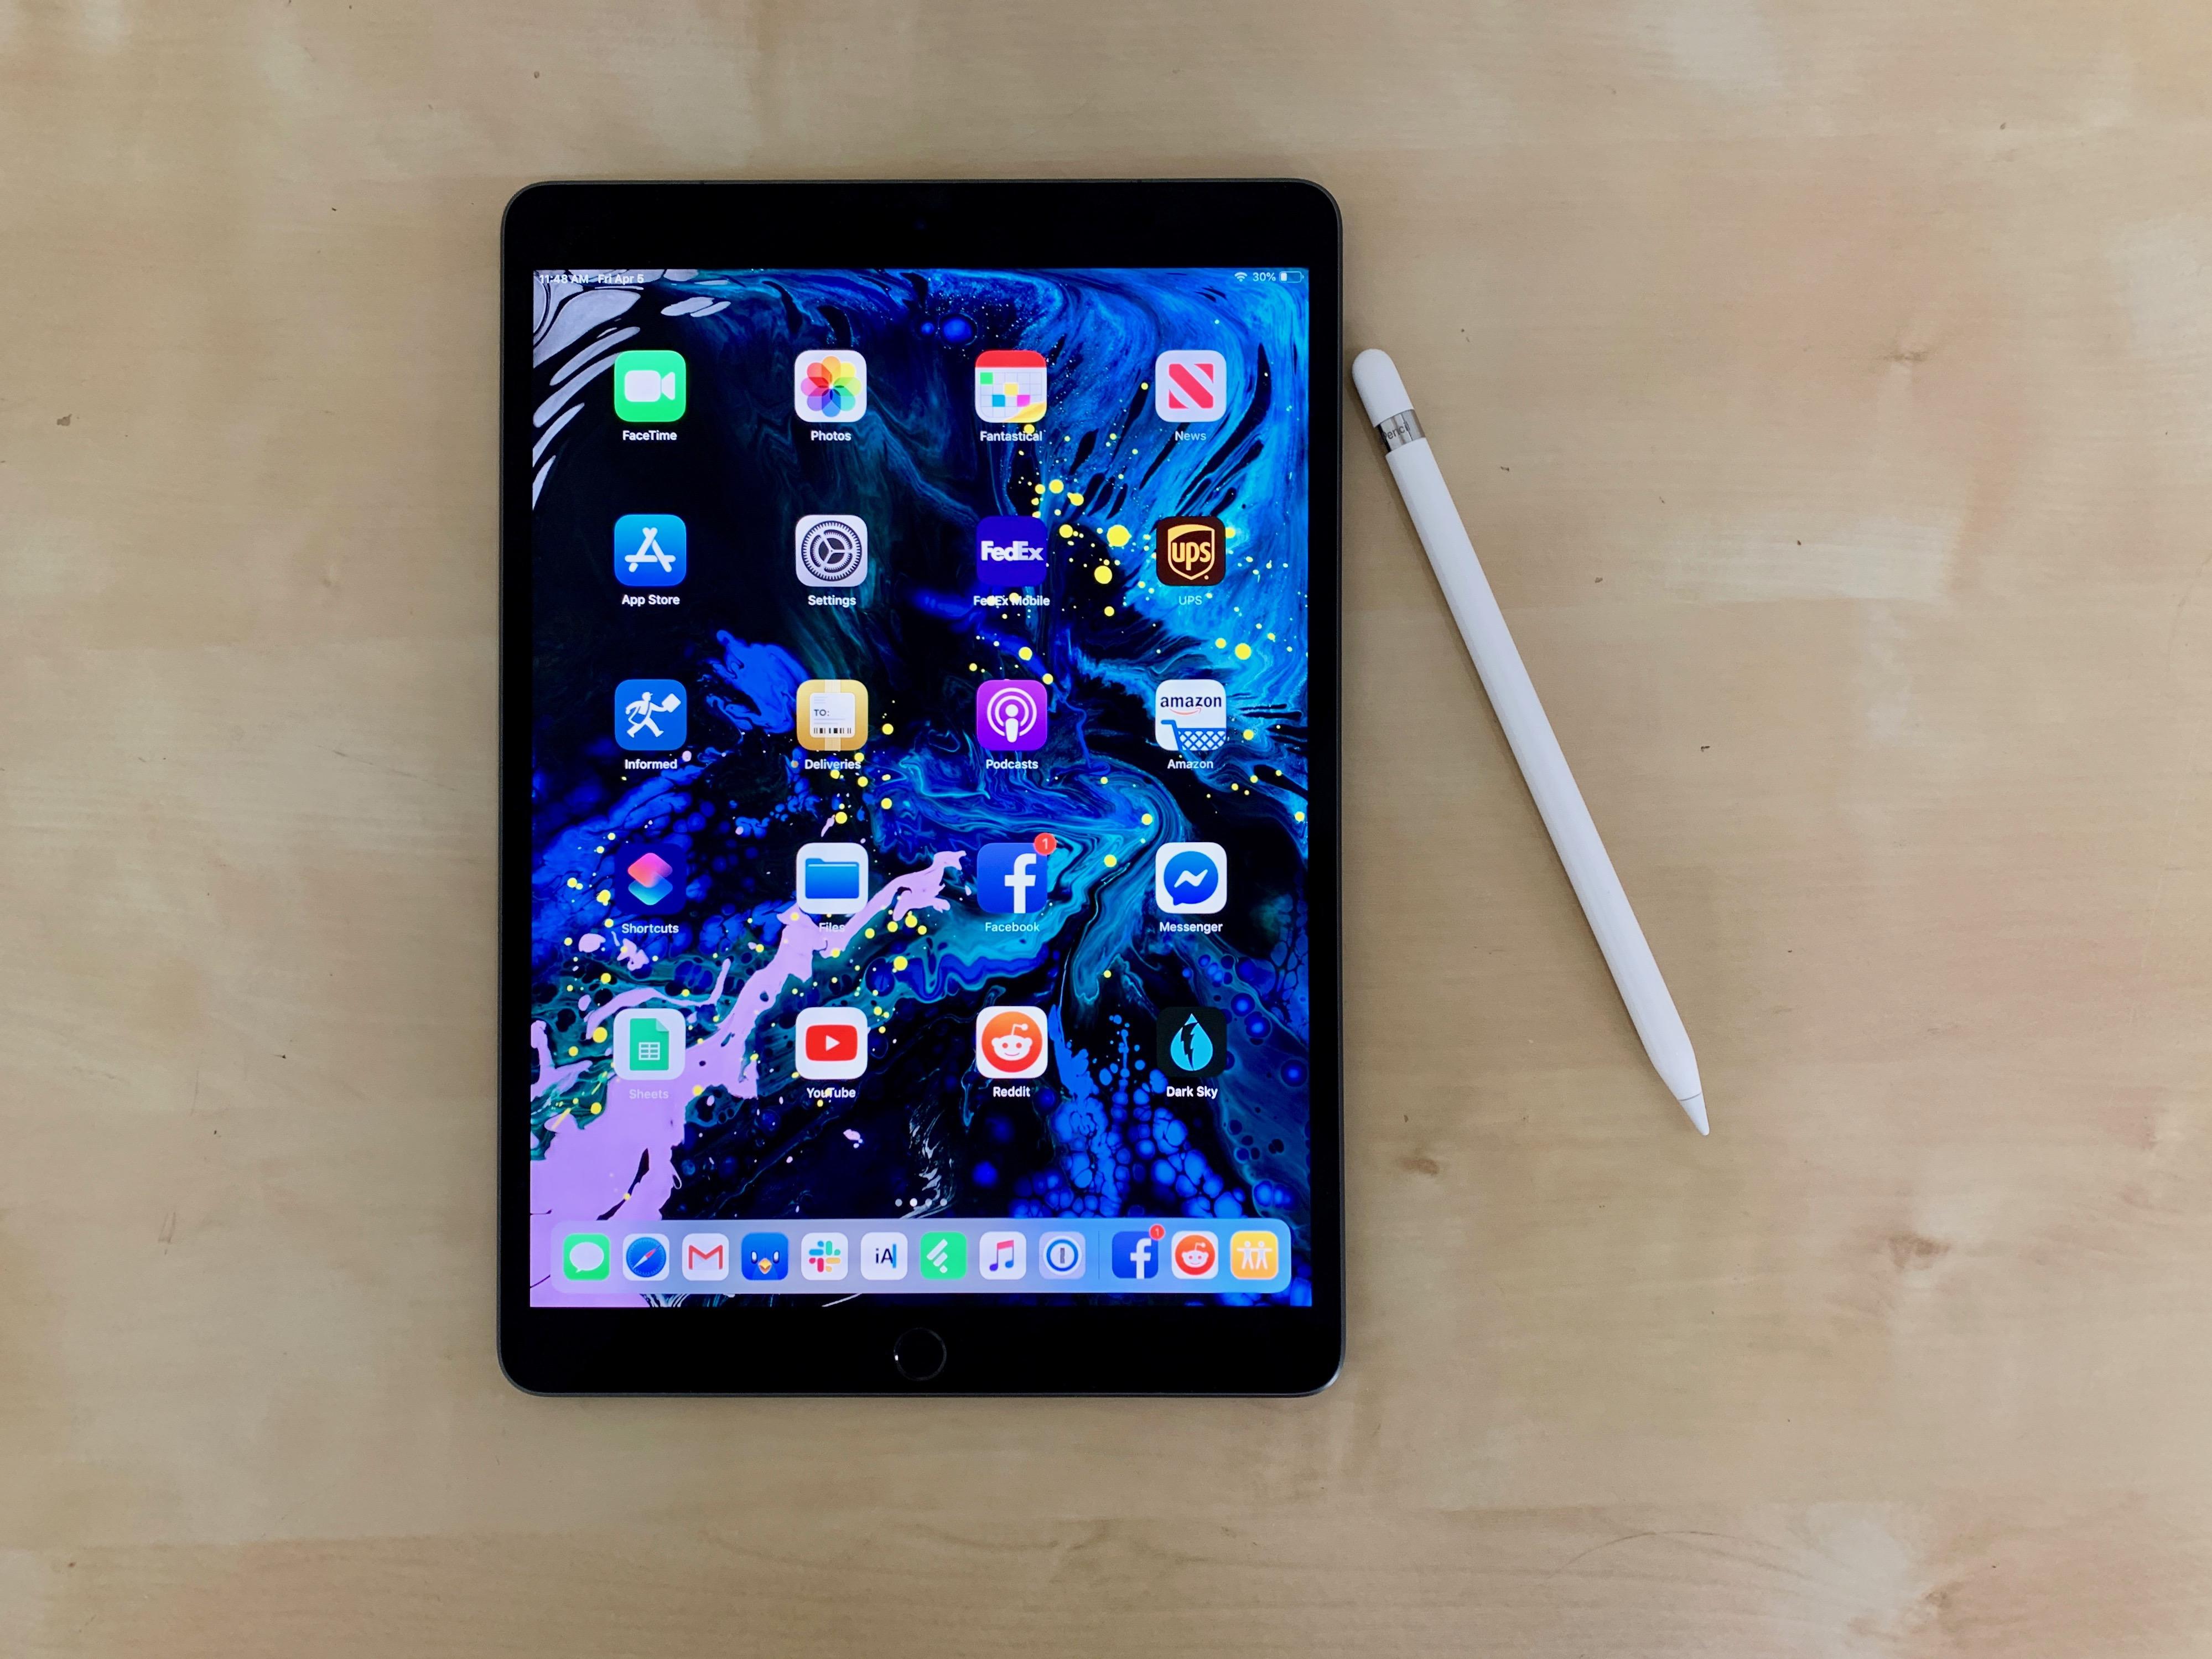 Apple iPad Pro 10.5 is Apple's best tablet